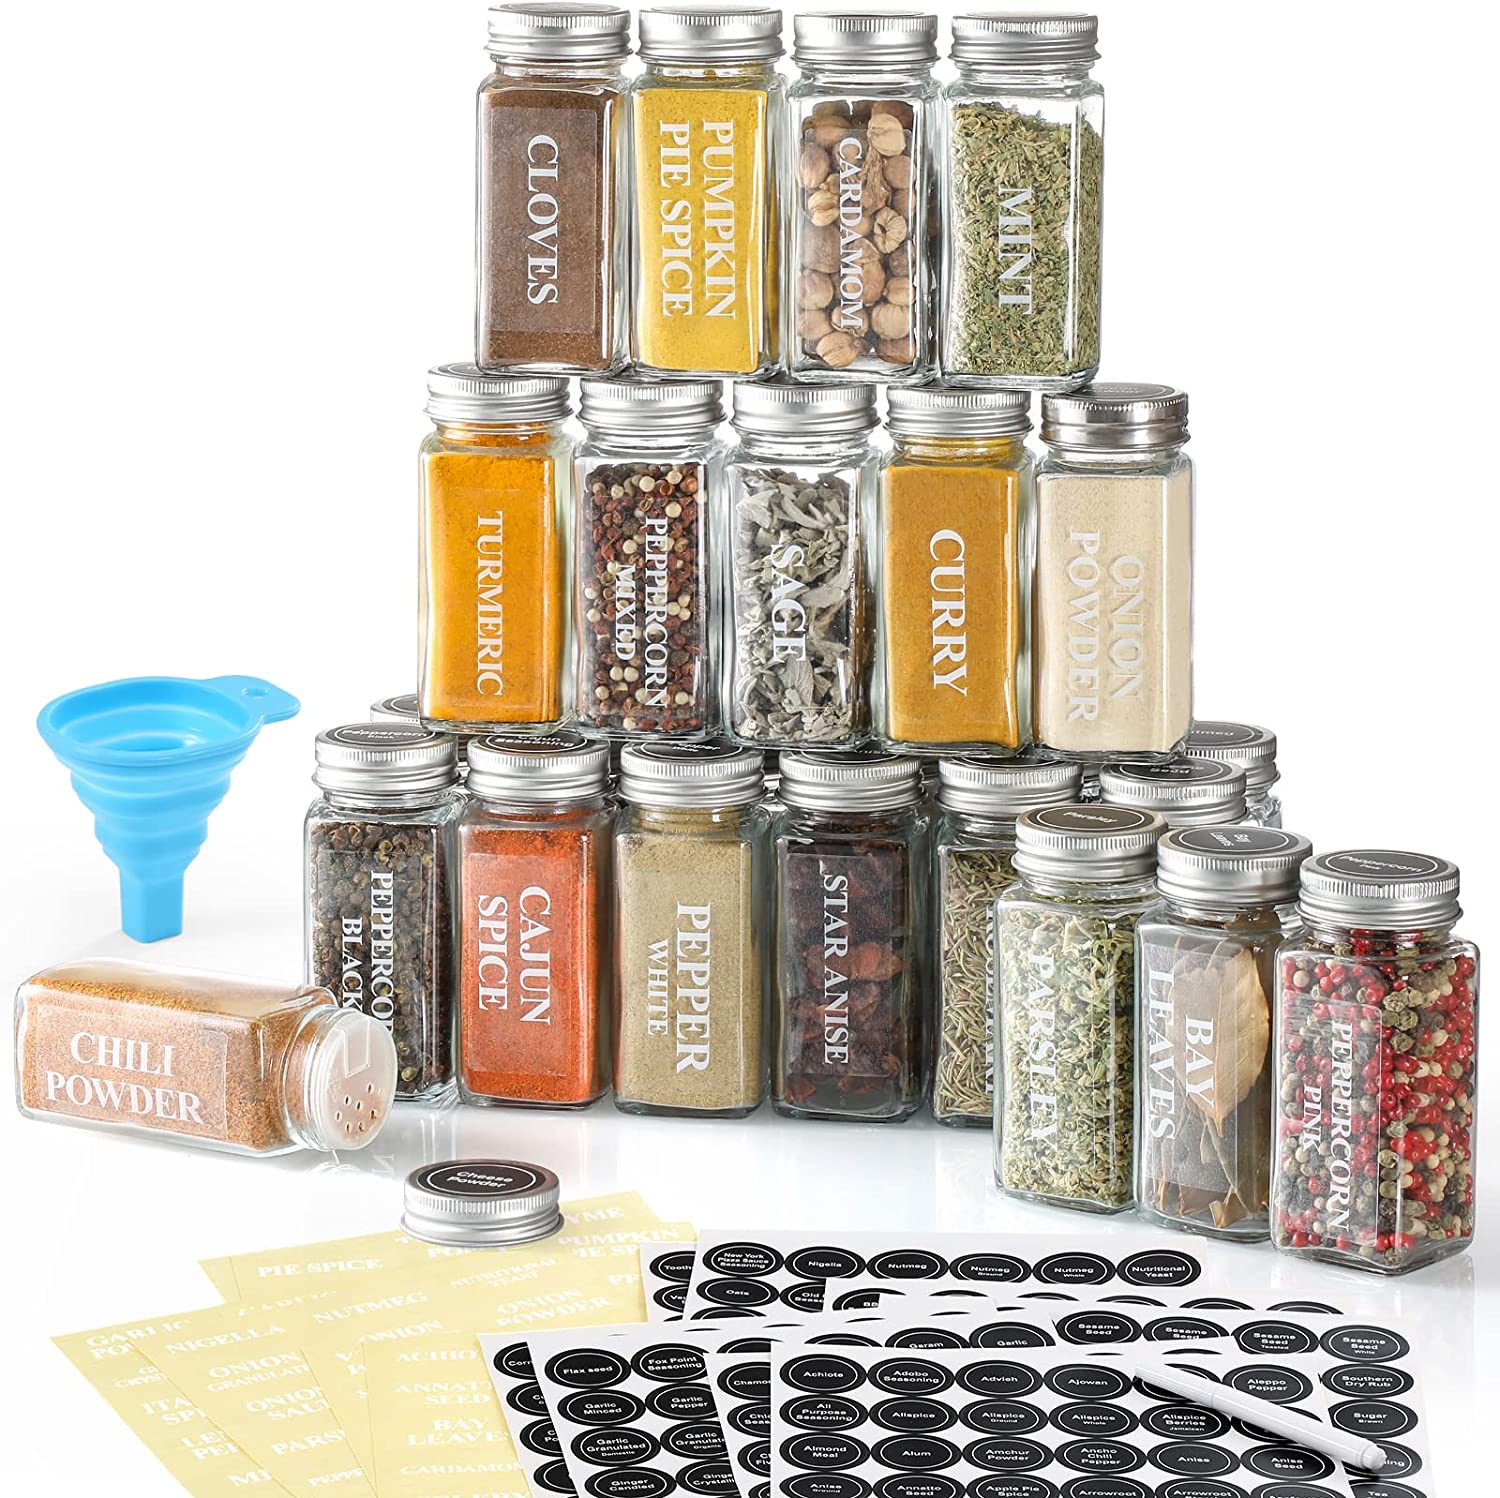 https://www.dontwasteyourmoney.com/wp-content/uploads/2023/02/aozita-snap-on-shaker-lids-spice-jars-24-piece-spice-jars.jpg